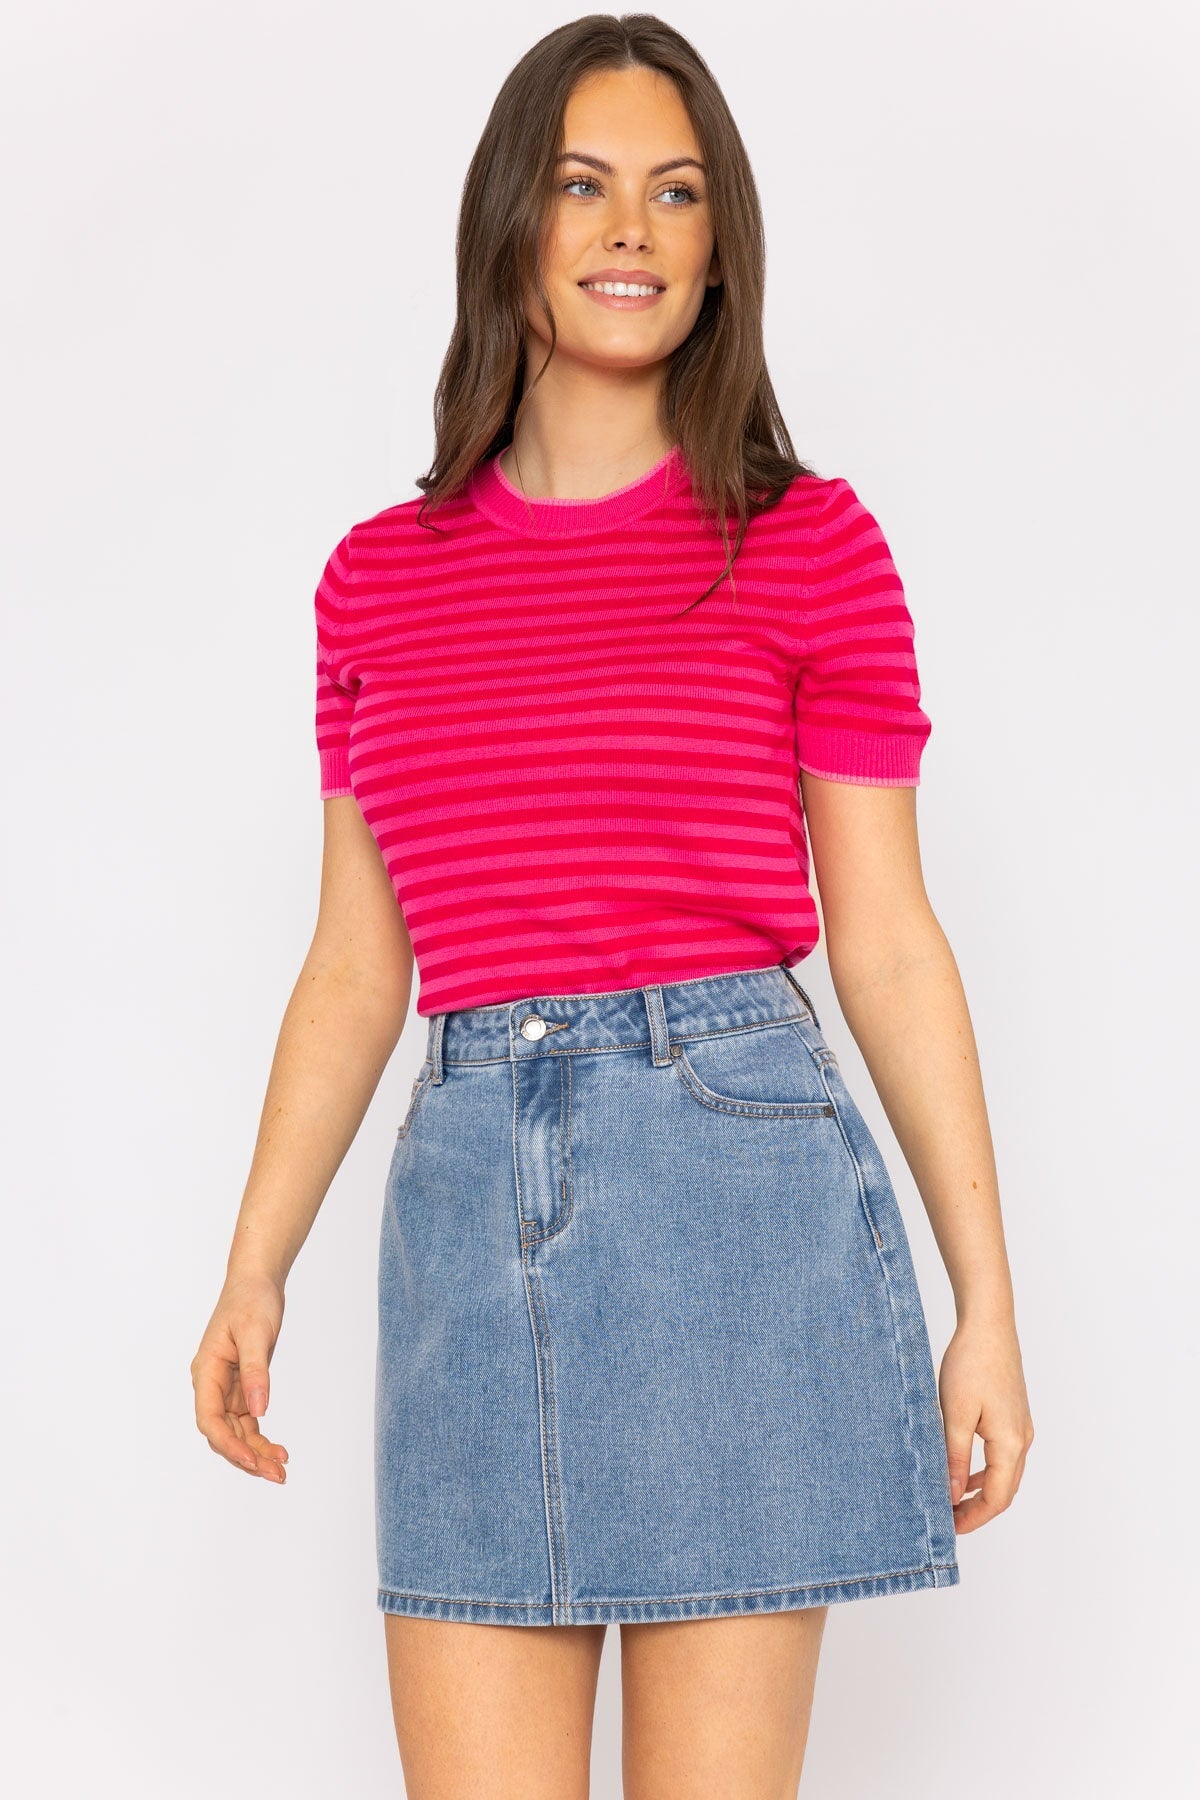 Slim Fit womens skirt denim Short Skirts Mid Waist Jeans Skirts Casual jeans  | eBay